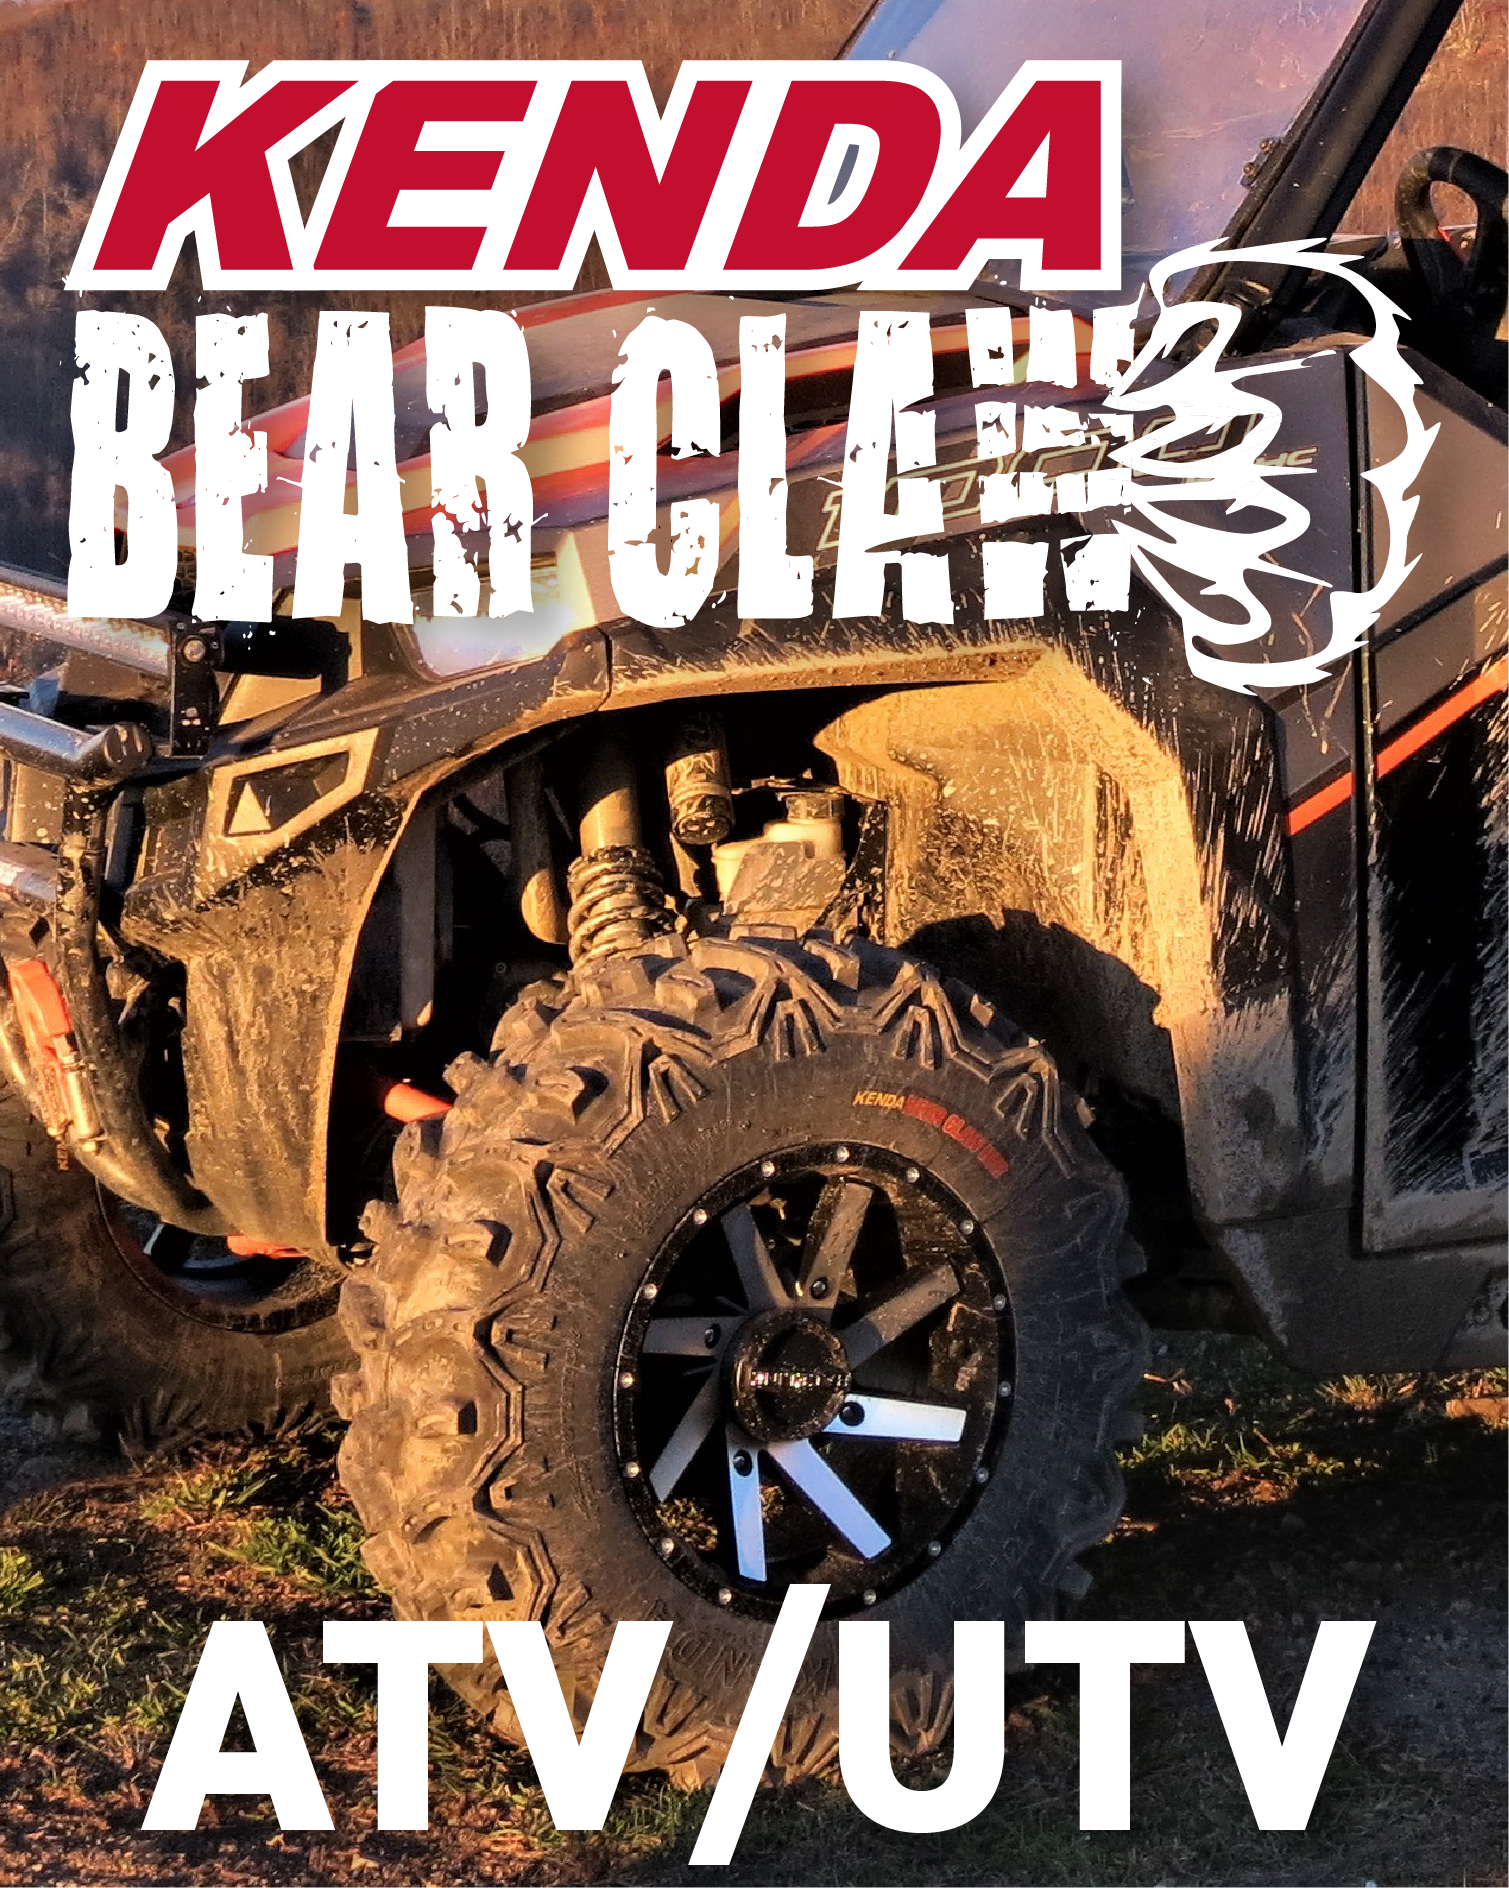 Kenda Bear Claw EX 27x12-12 Rear ATV 6 PLY Tires Bearclaw 27x12x12 - 2 Pack